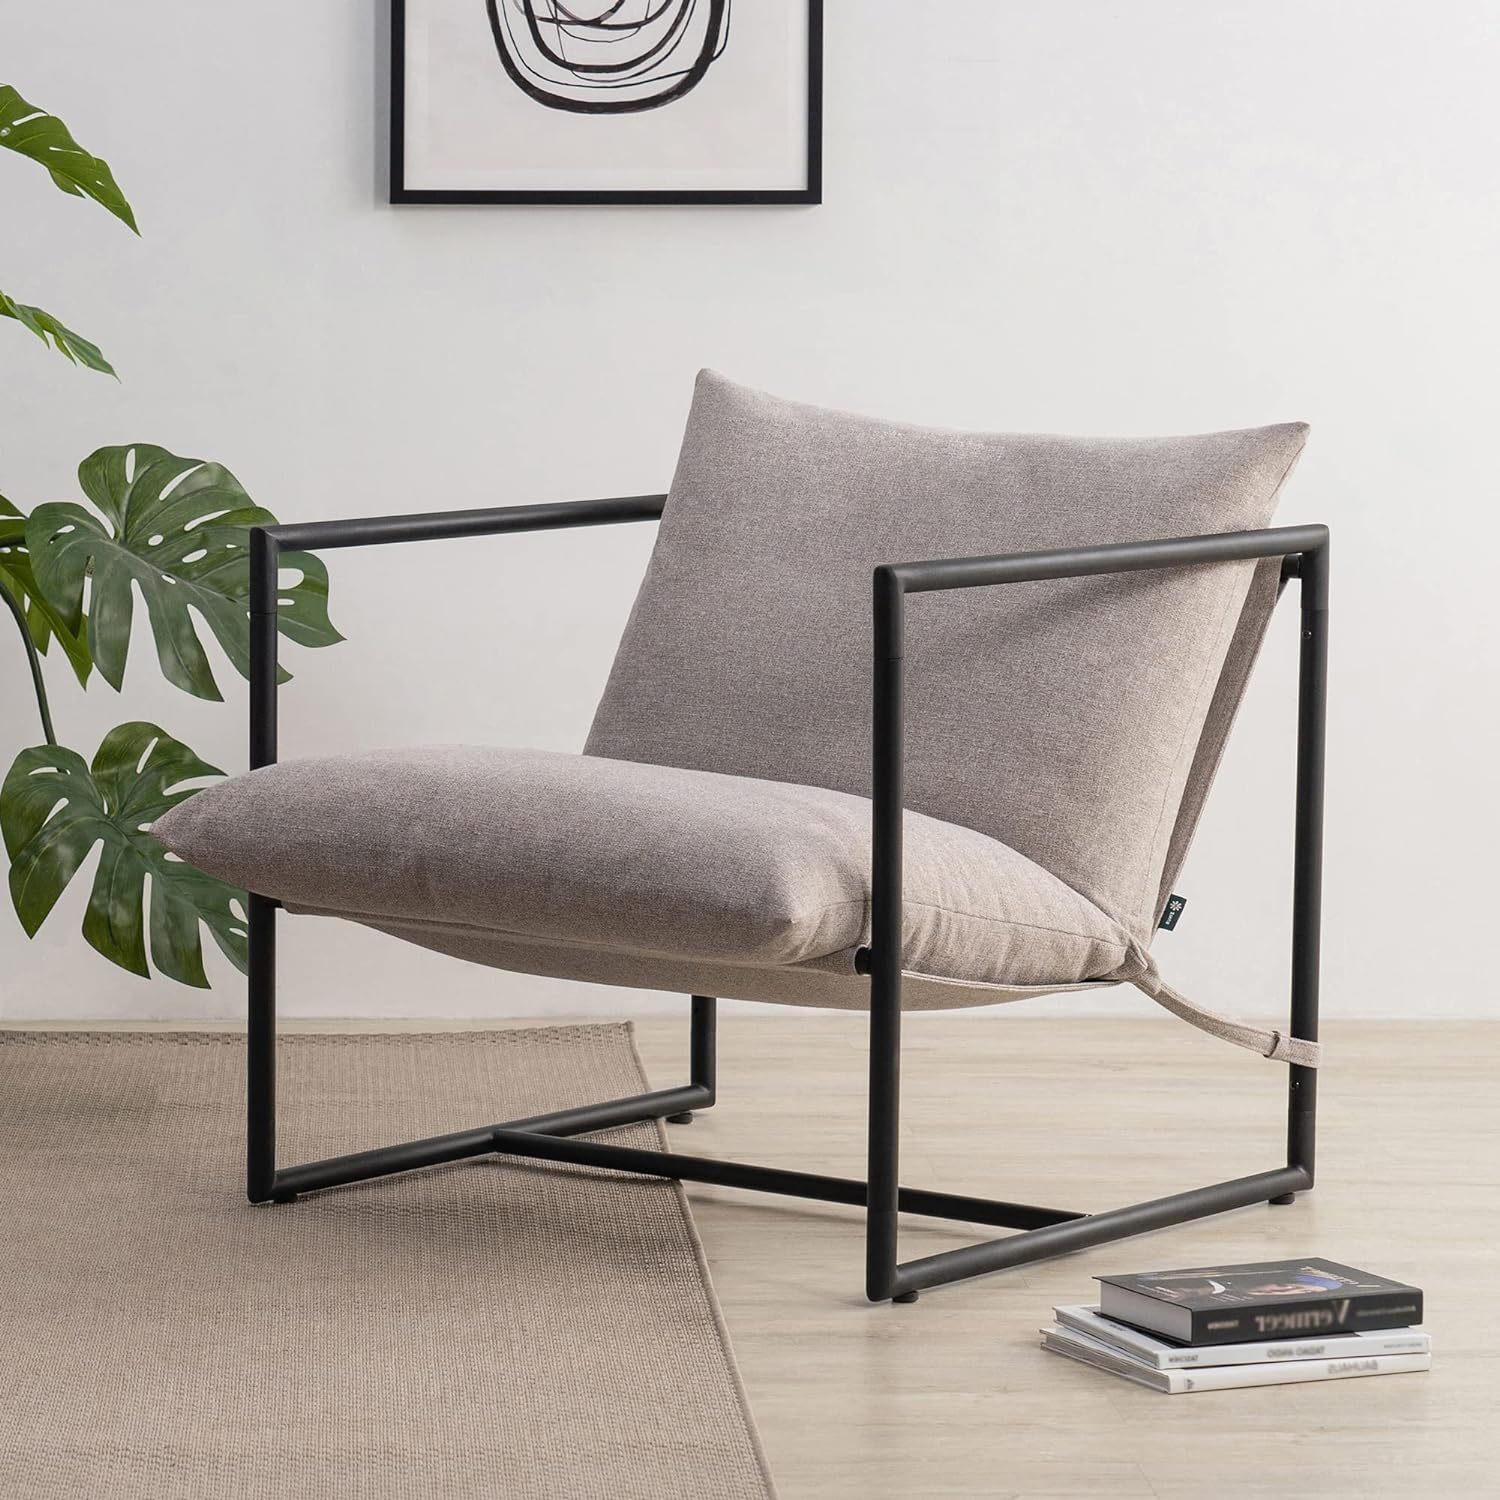 Zinus Aidan Sling Accent Chair / Metal Framed Armchair, Oatmeal, With Shredded - $117.94